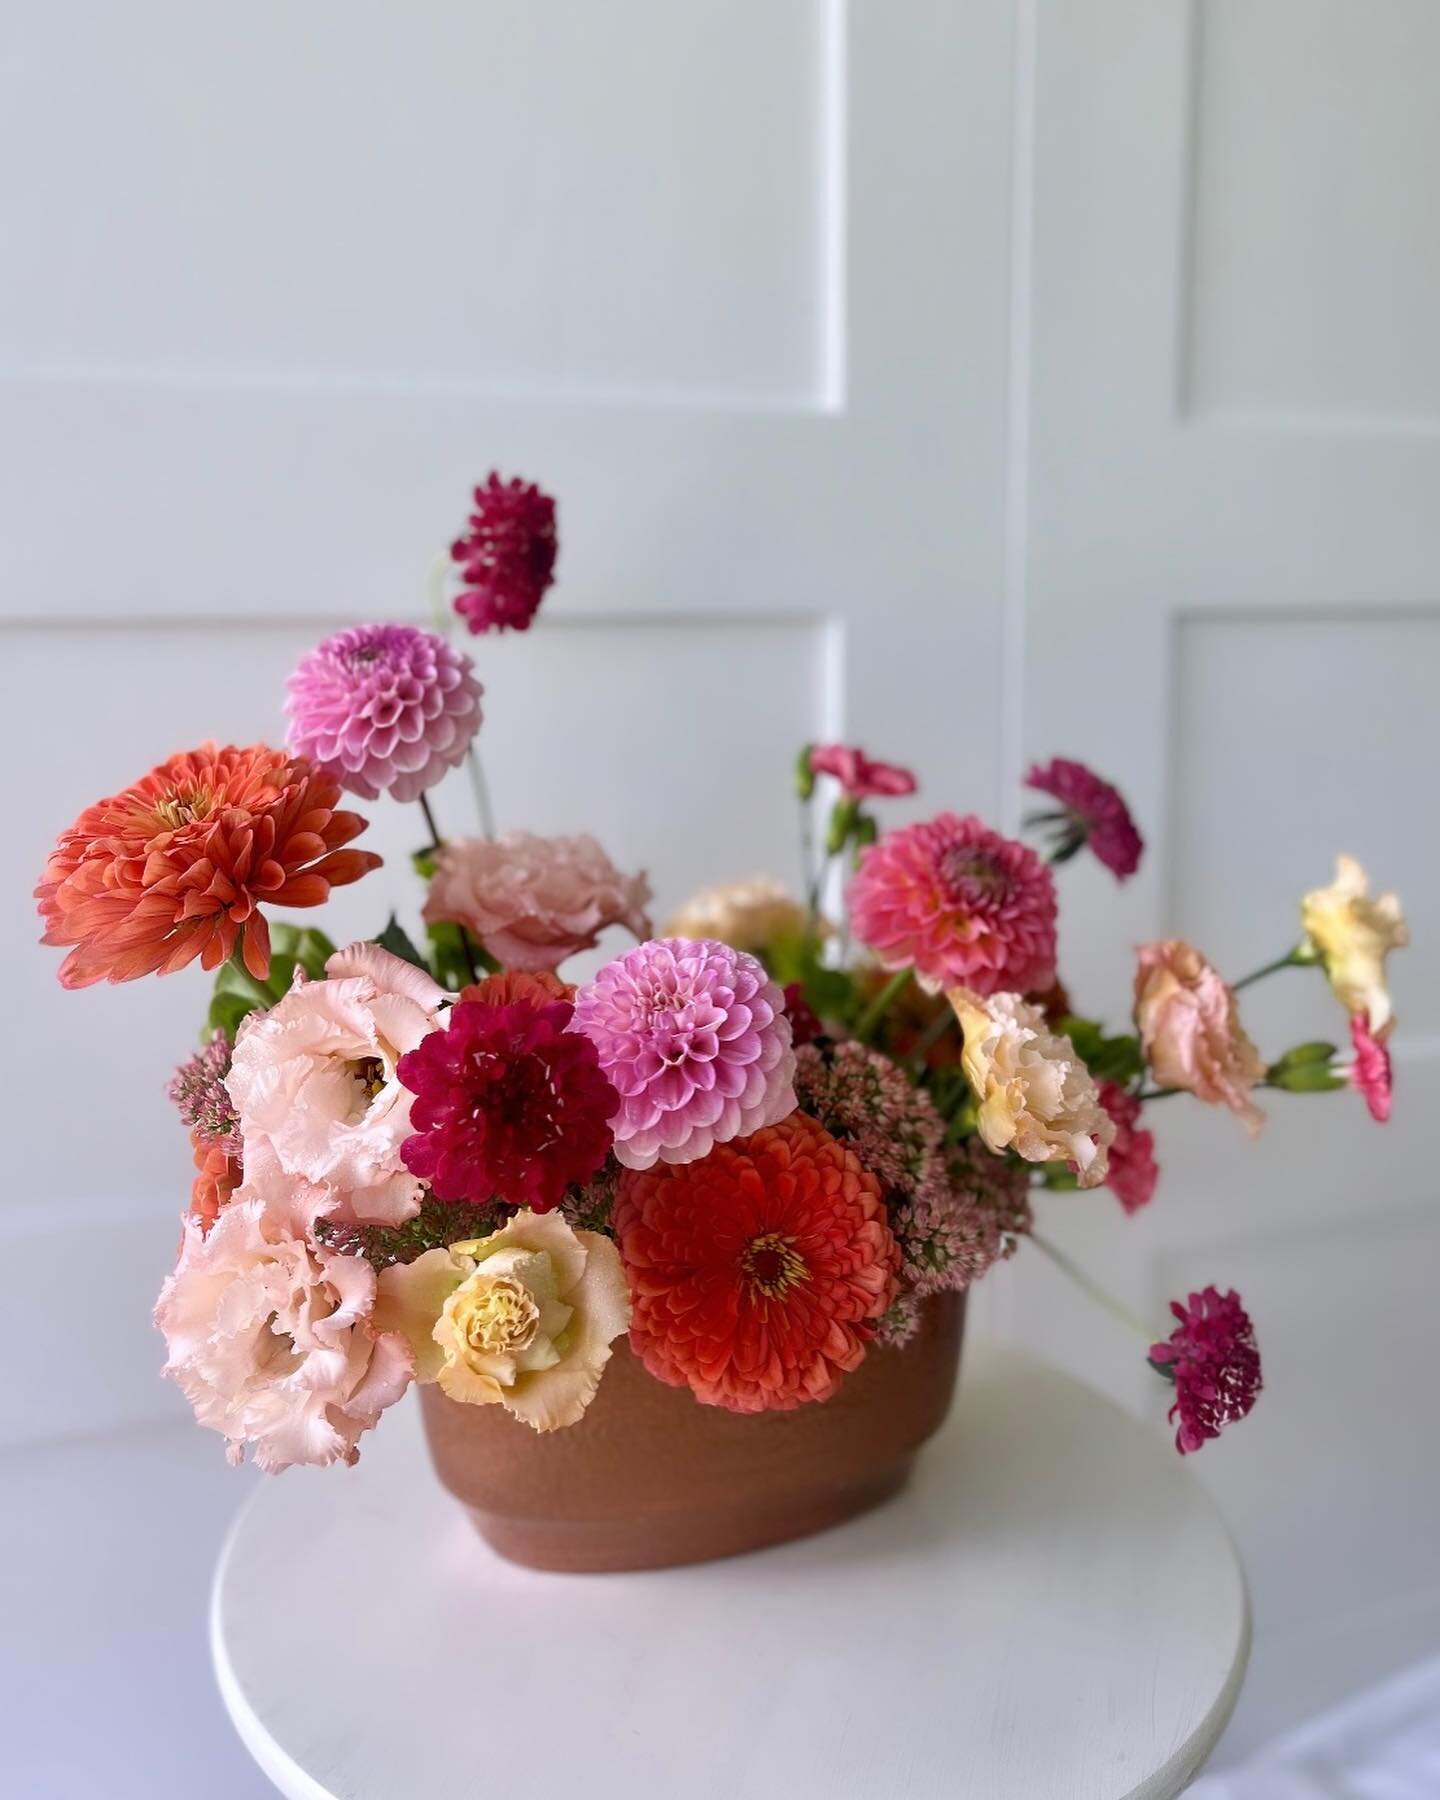 One arrangement, 3 looks🌸🧡

#seasonalflowers
#flowerarrangement 
#floraldesign 
#fallblooms